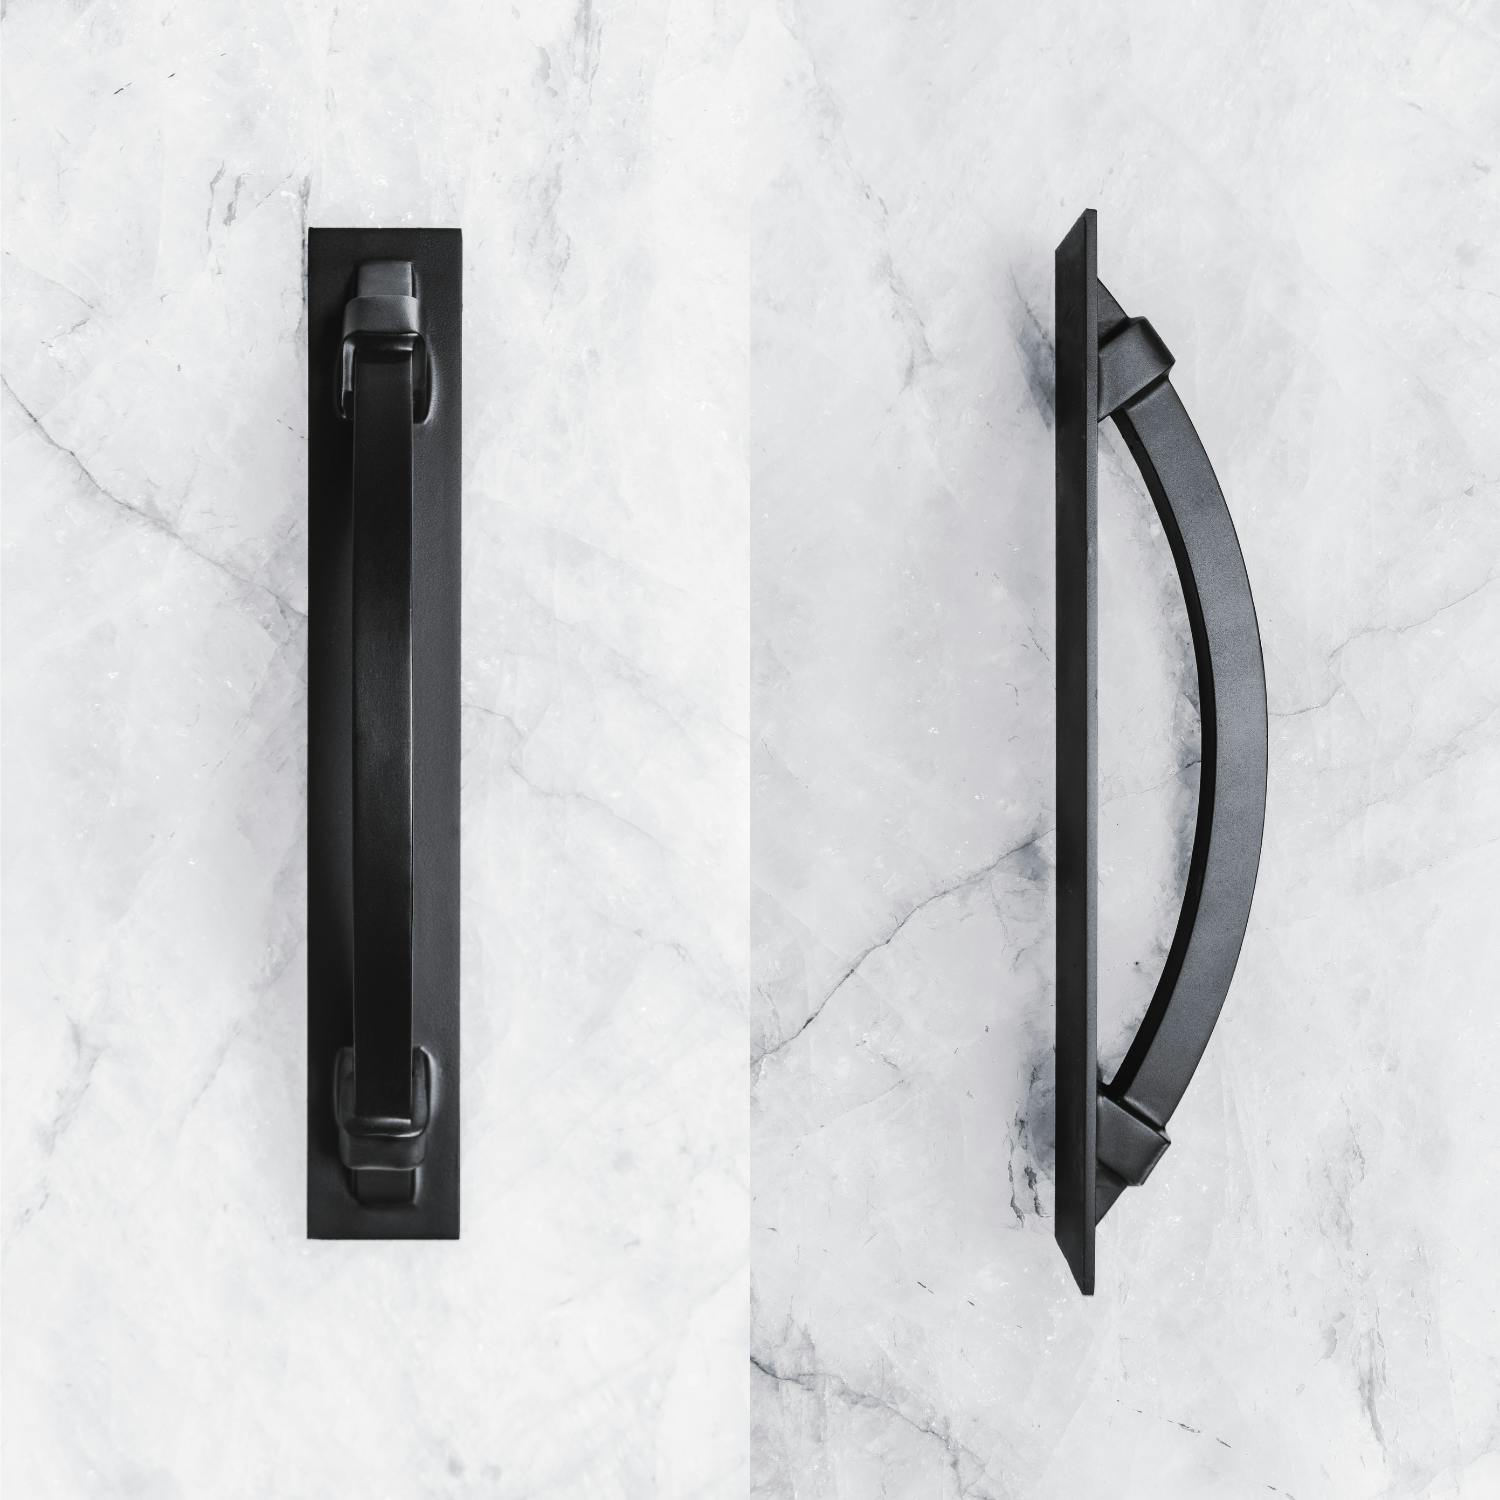 Stylish iron door handle with matte black finish and minimalist design"